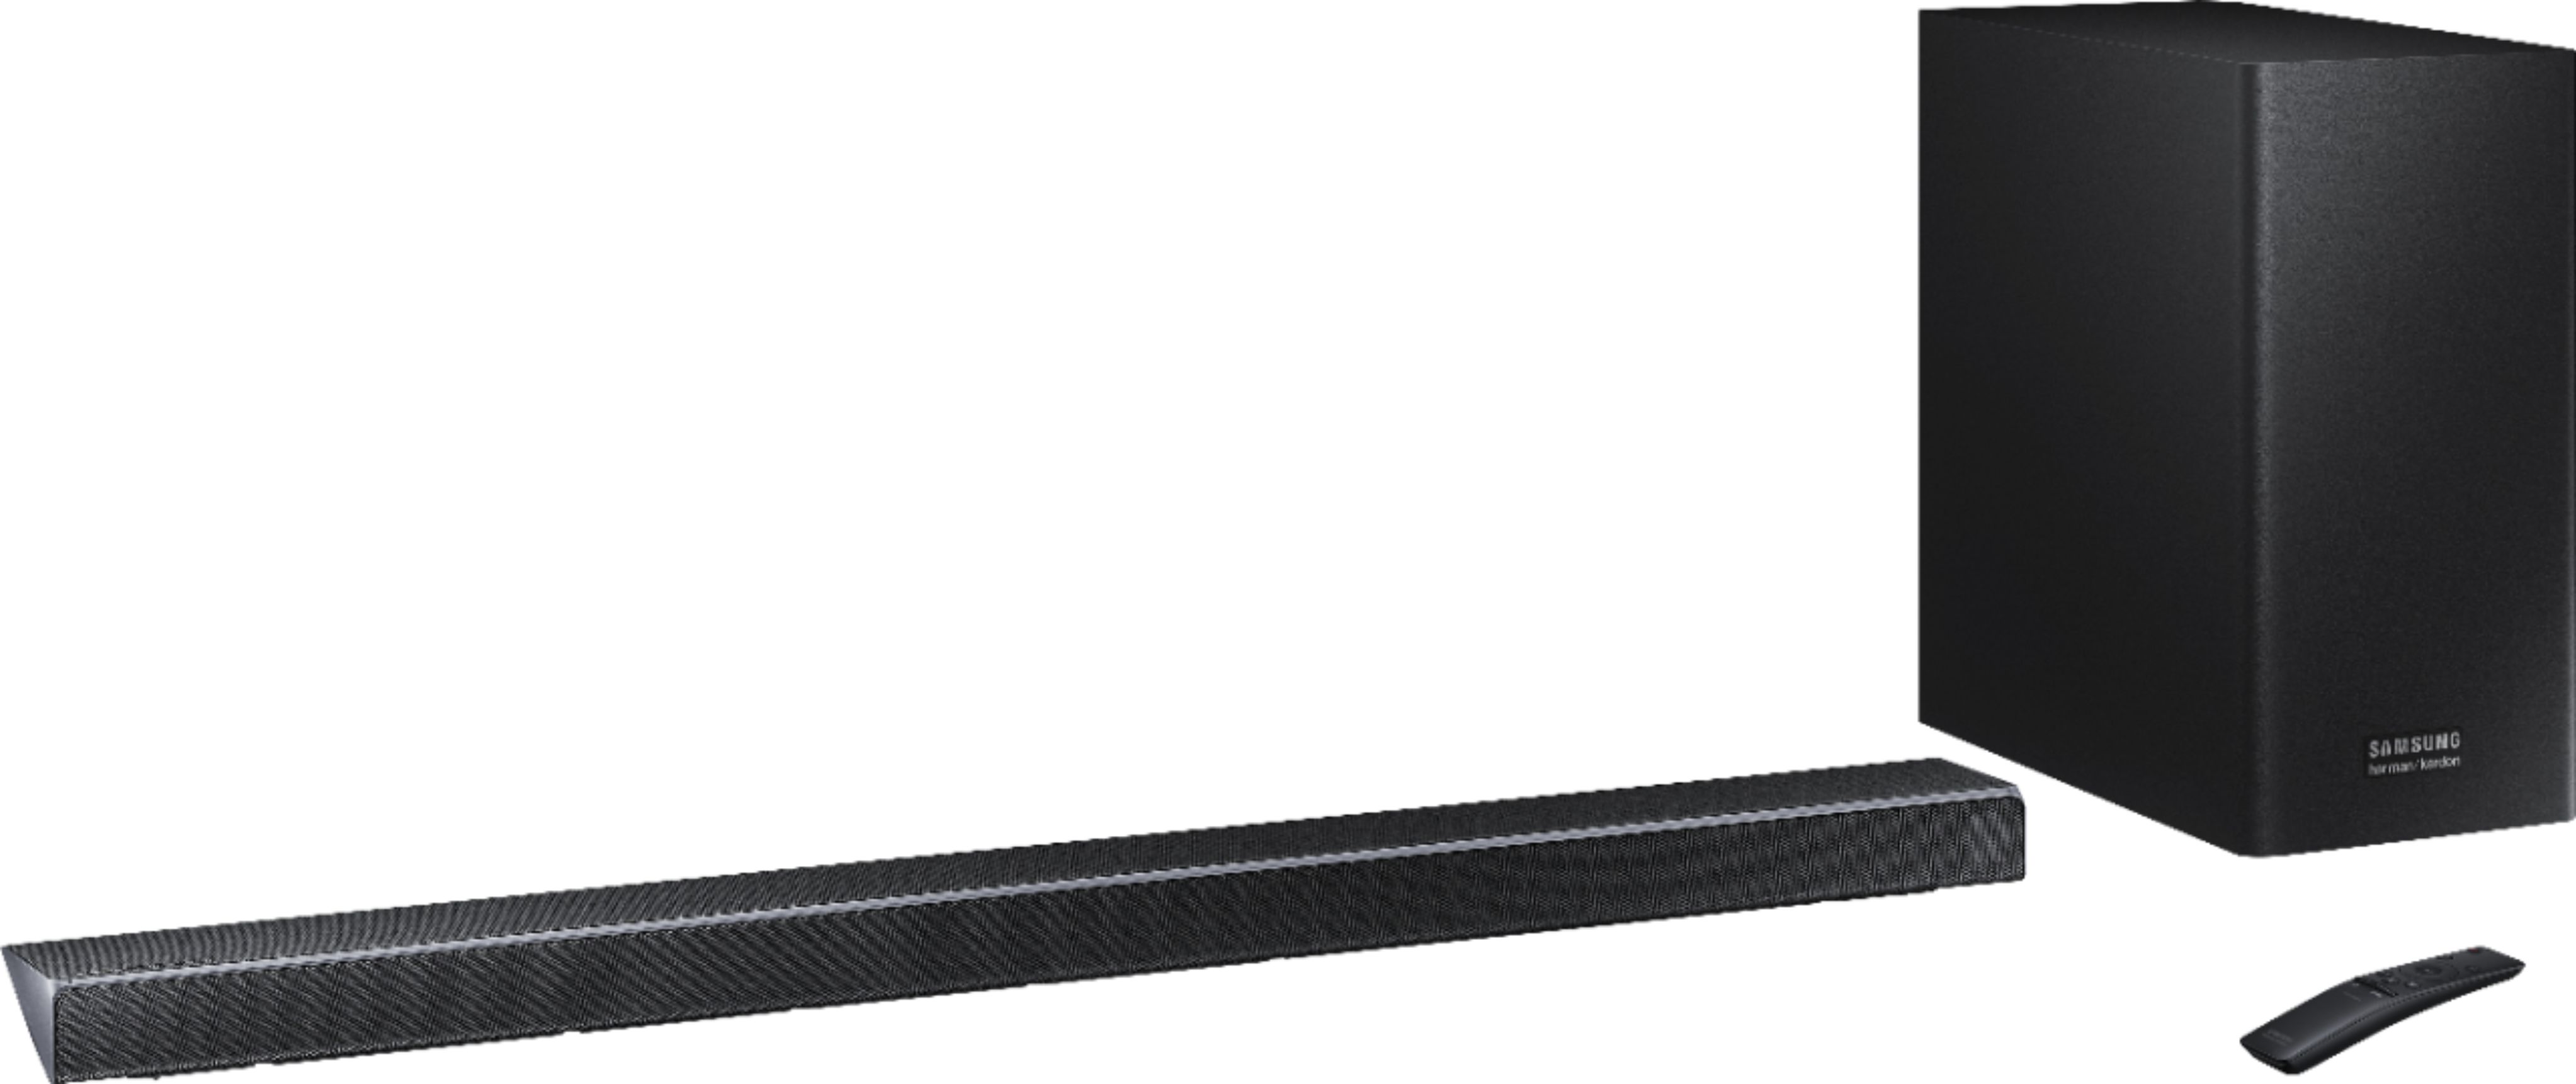 Angle View: Anker - Soundcore Liberty Earbuds True Wireless In-Ear Headphones - Black